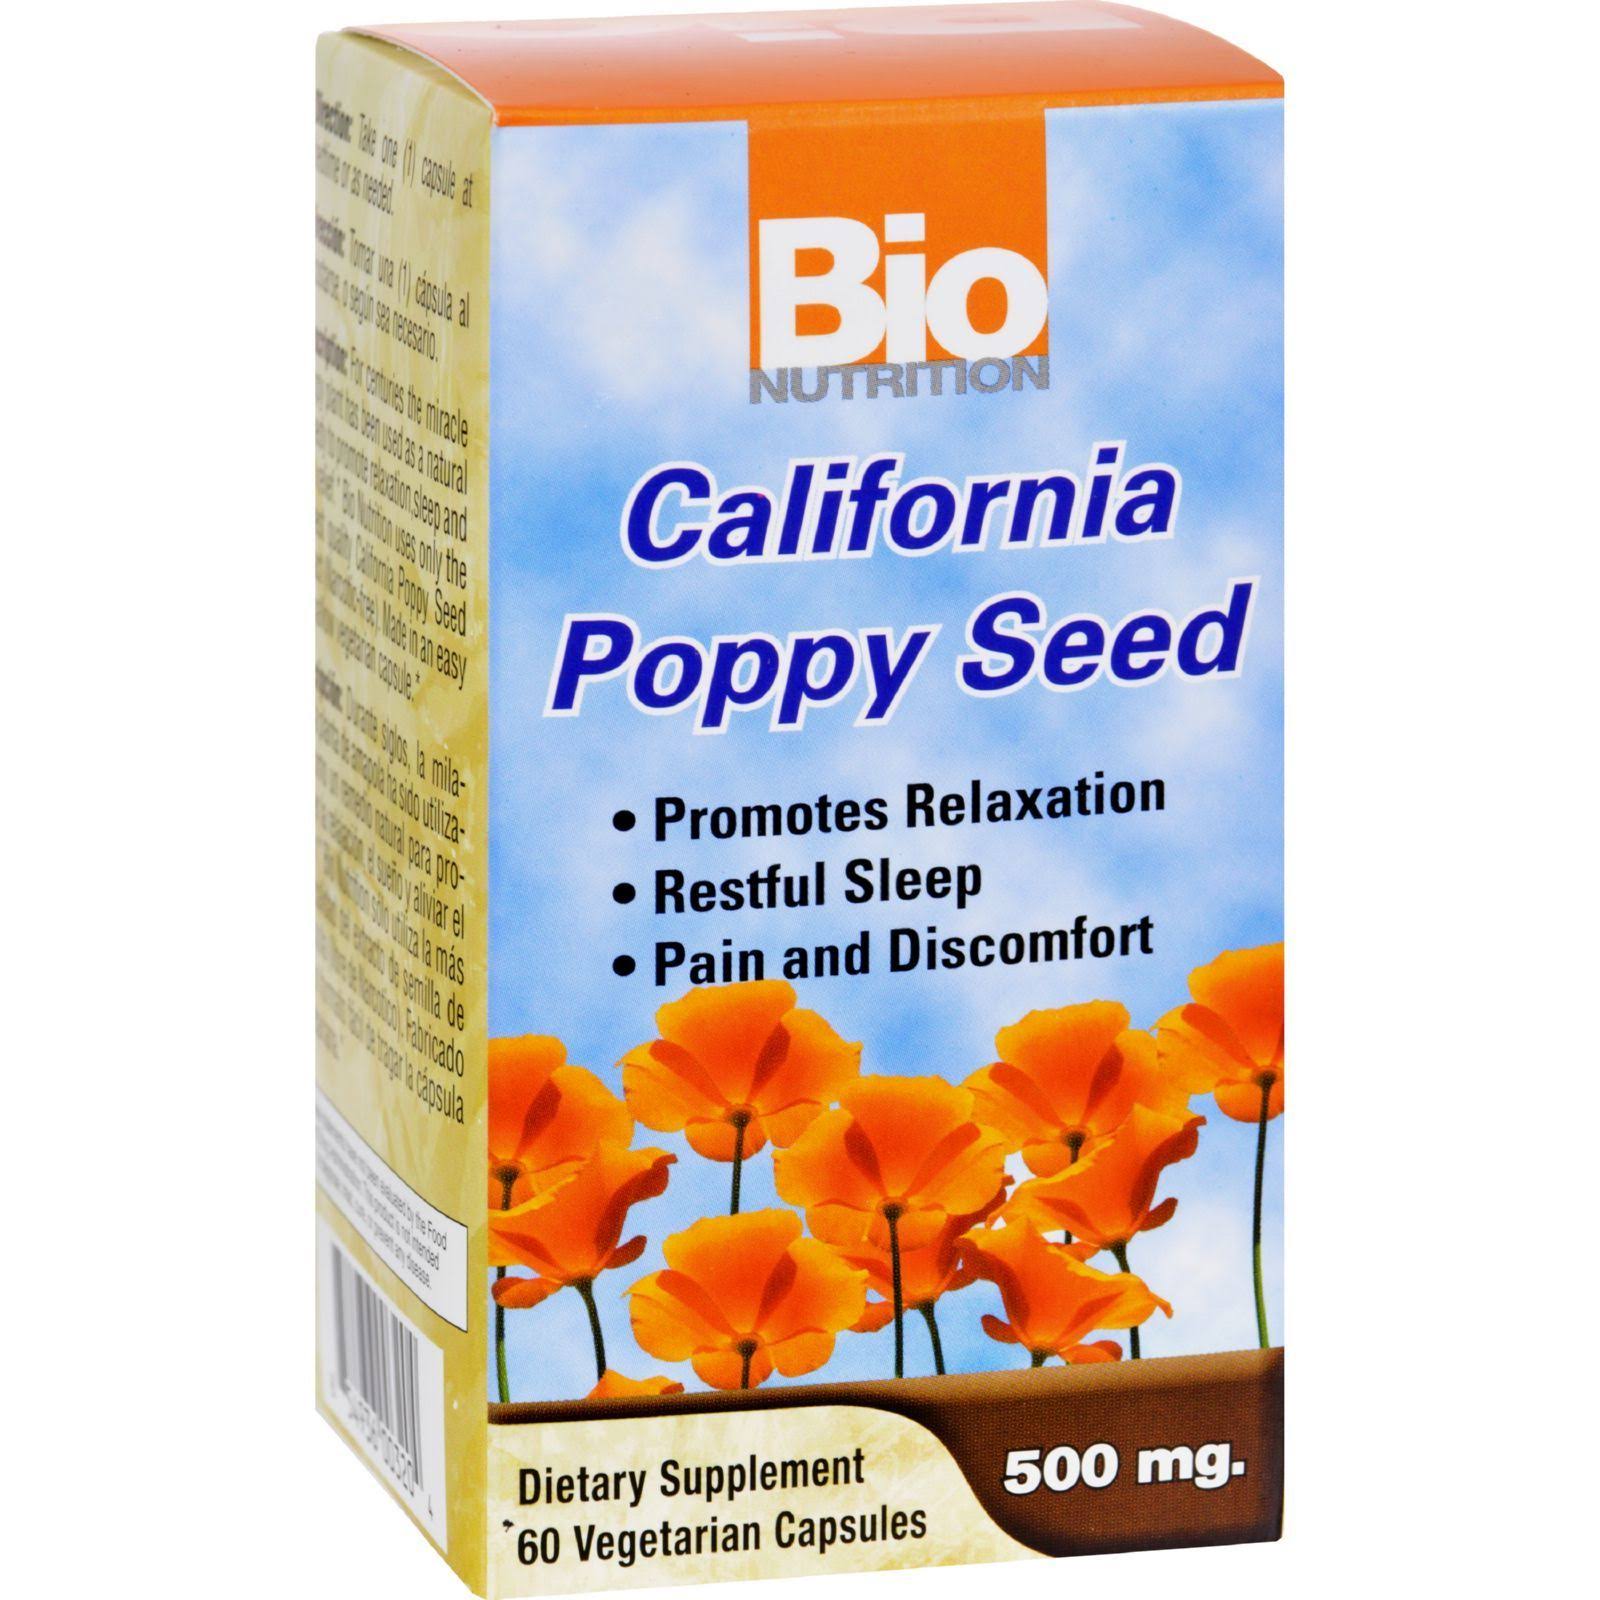 Bio Nutrition California Poppy Seed - 500mg, 60ct